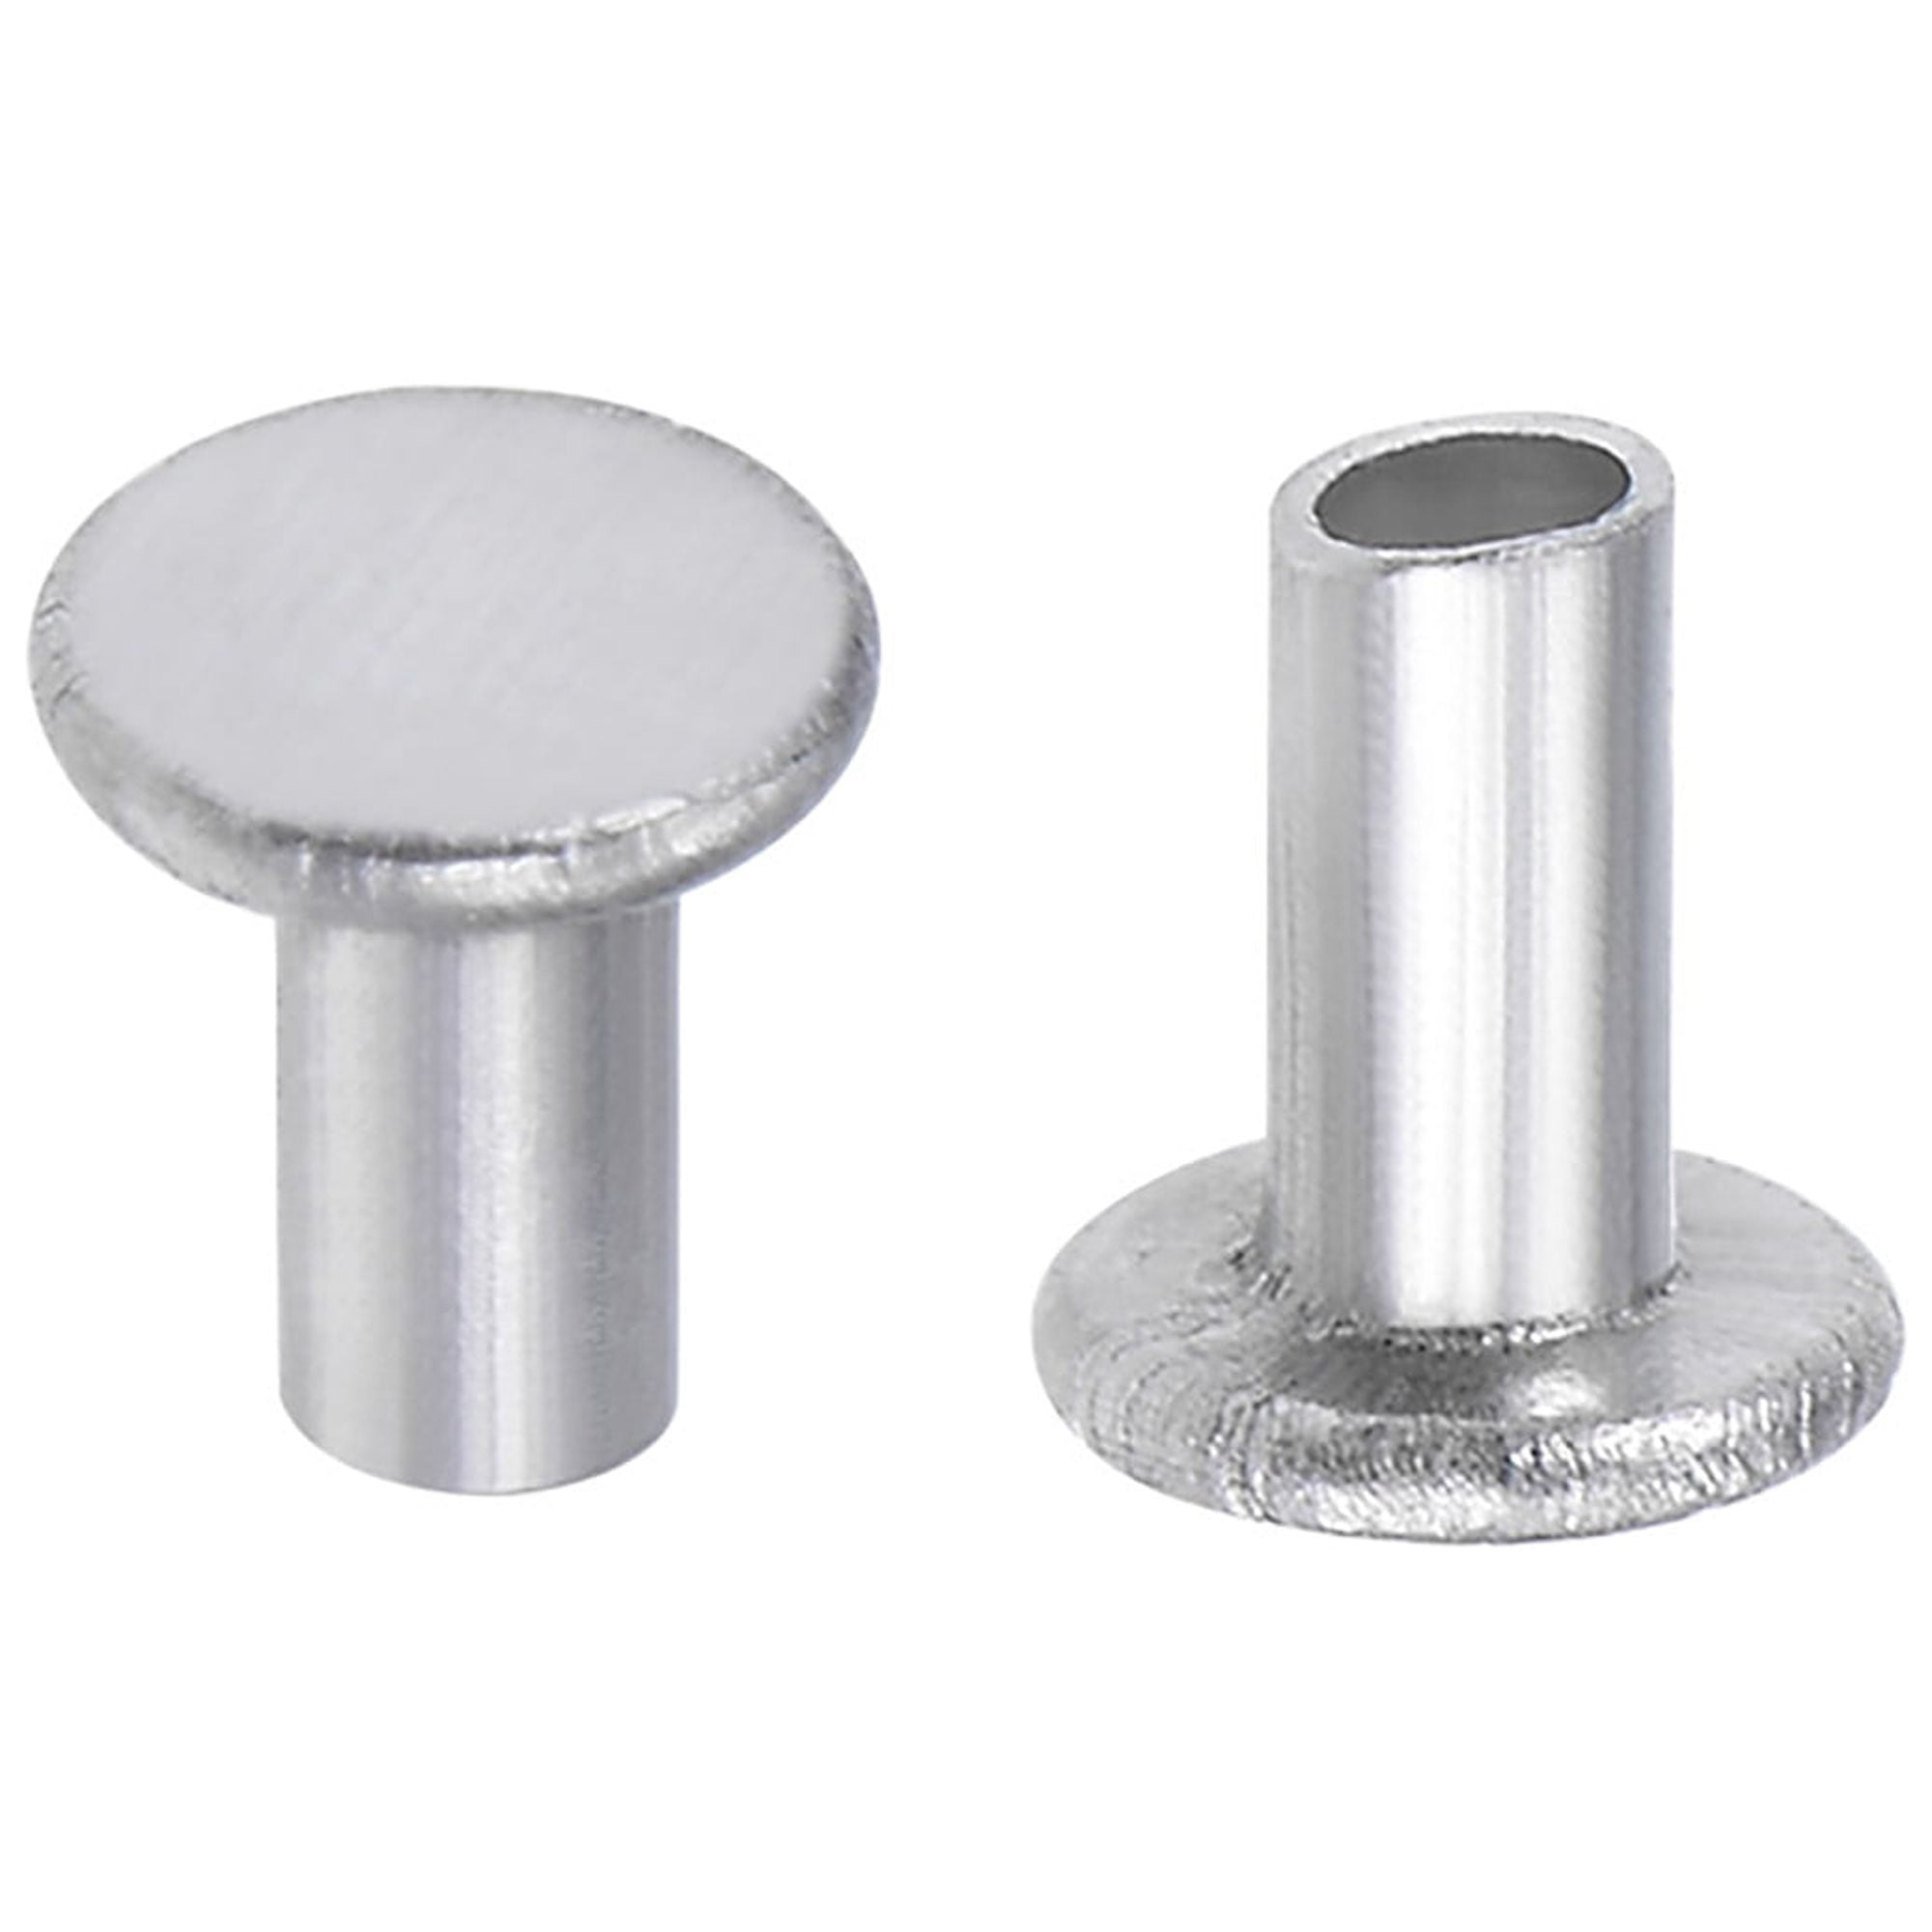 Aluminium Flat Head Solid Rivets Diameter 2mm, 3mm, 4mm, 5mm, 6mm, 8mm Rivet